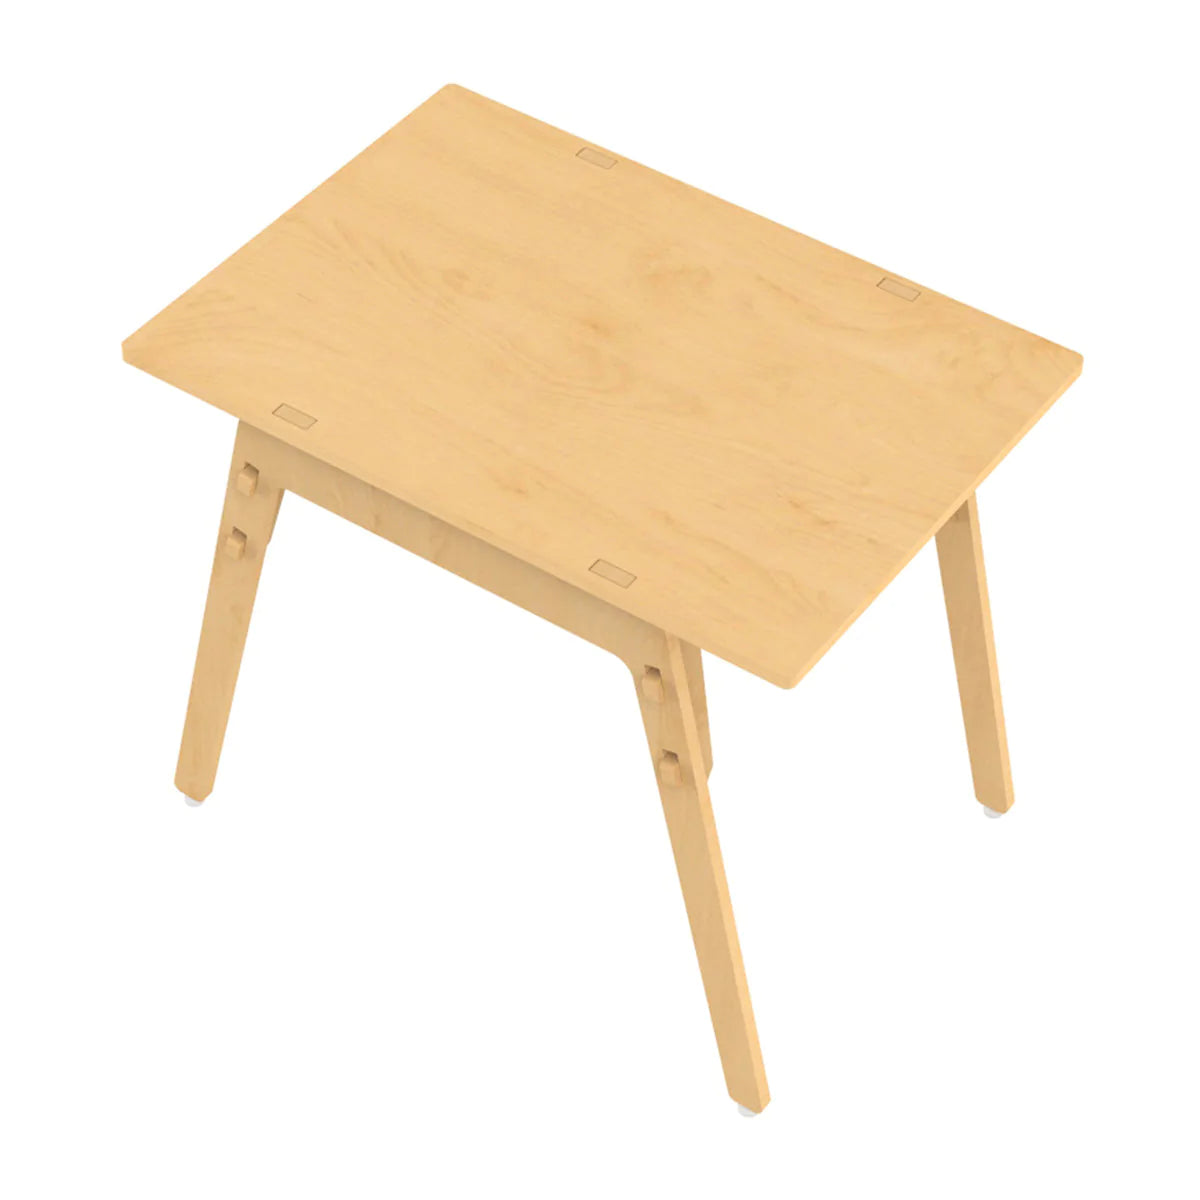 Buy Black Kiwi Wooden Table - Natural - SkilloToys.com